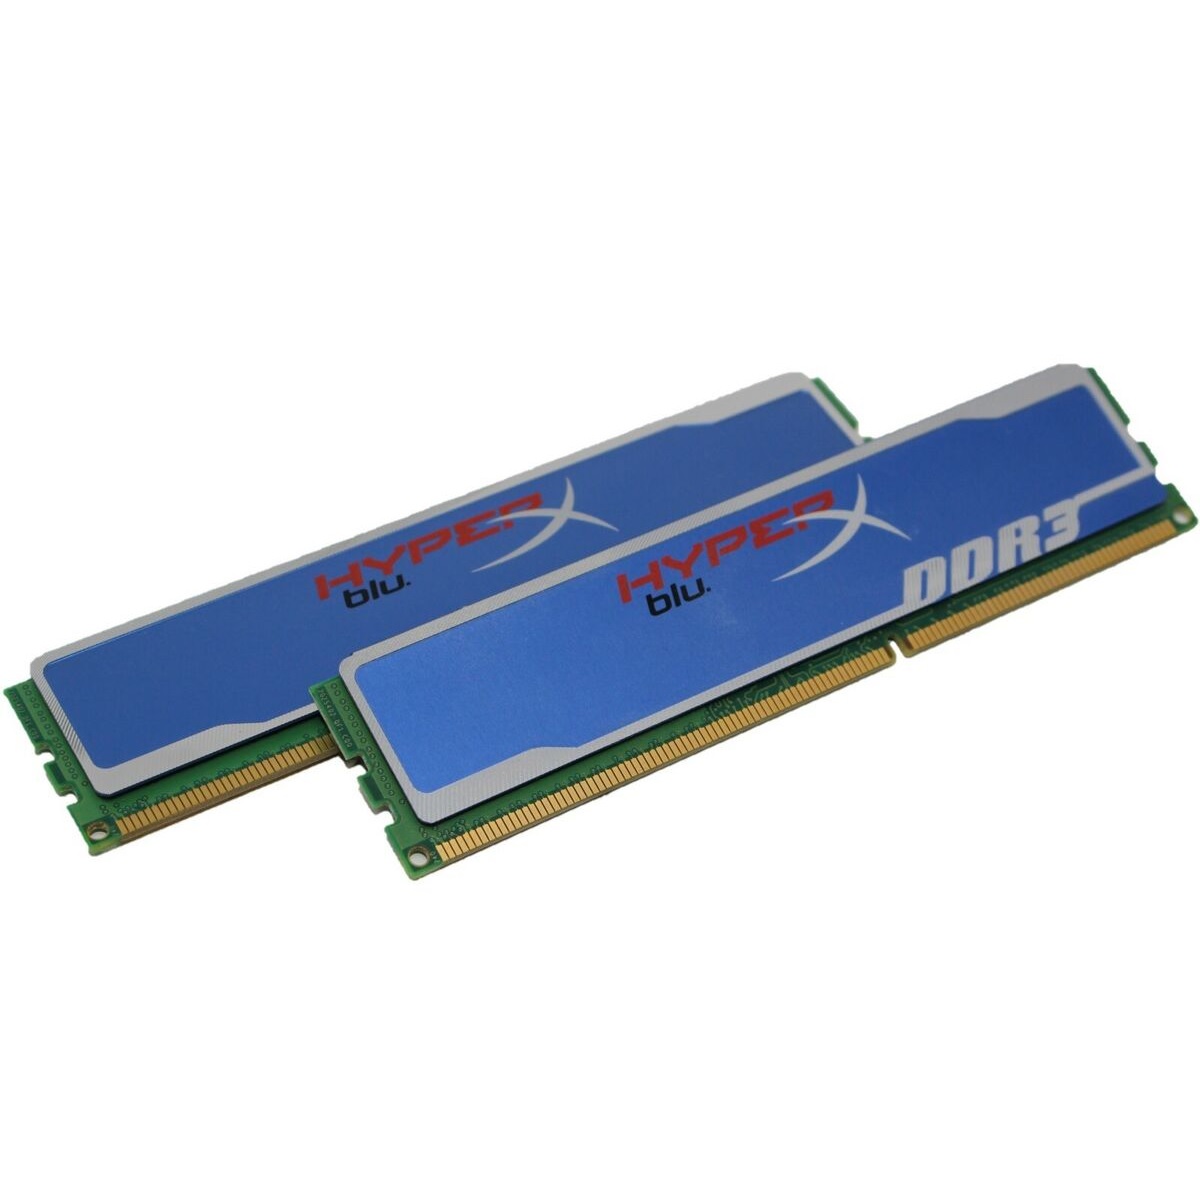 Kingston HyperX Blu 4GB (2x2GB) DDR3 PC3-12800C9 1600MHz Dual Channel Kit (